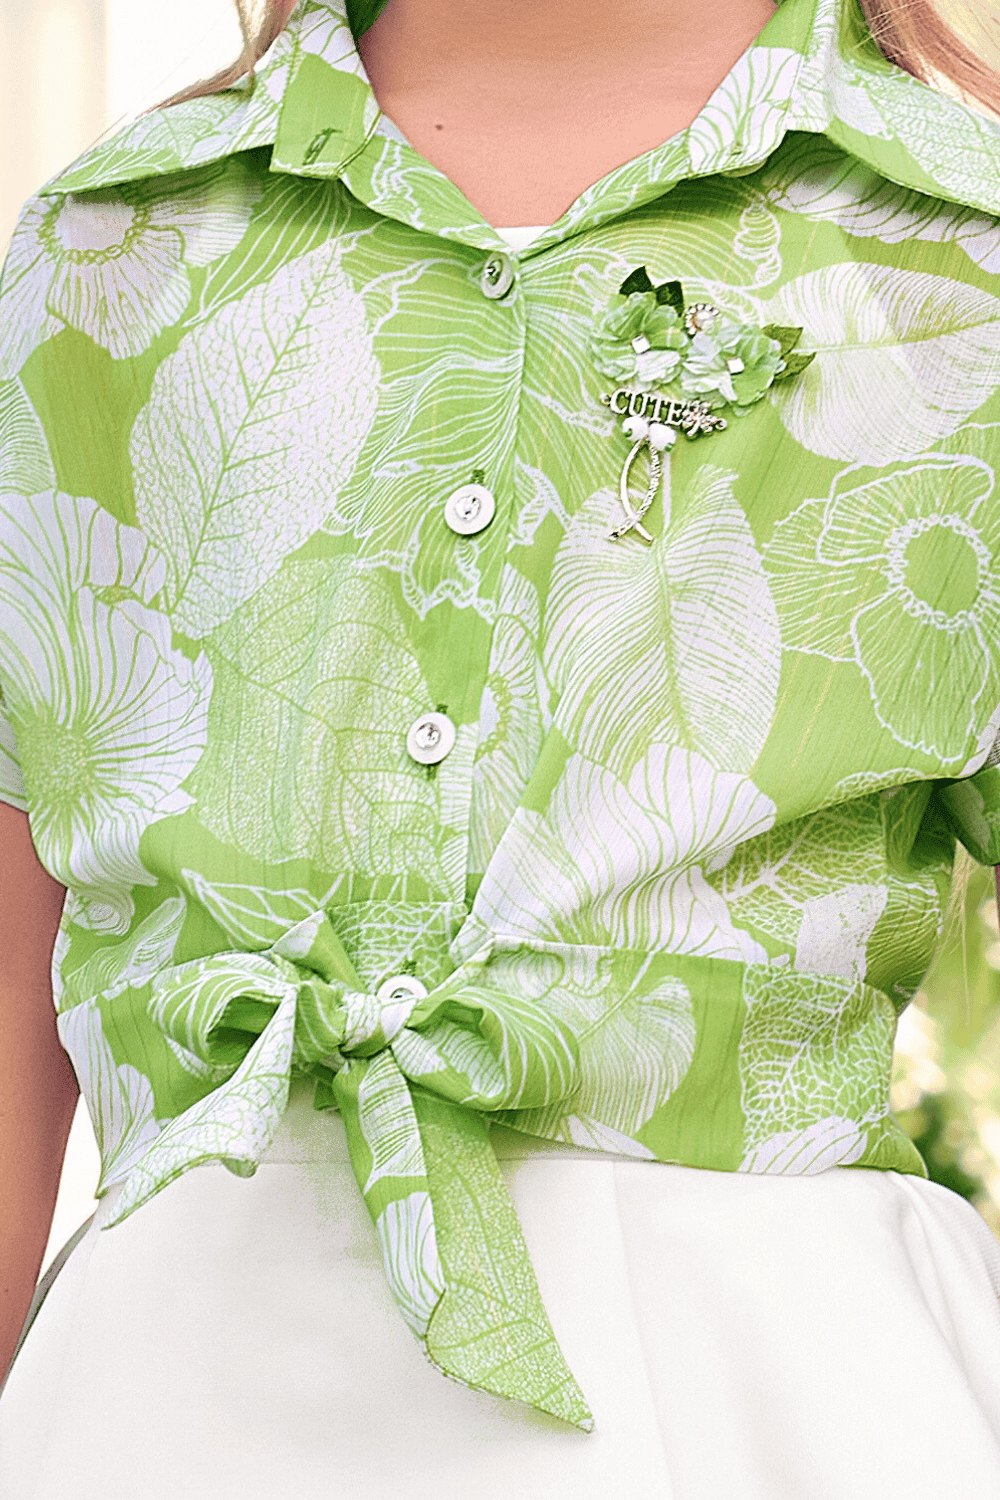 Green Digital Print Top and Half White Divider Skirt for Girls - Seasons Chennai